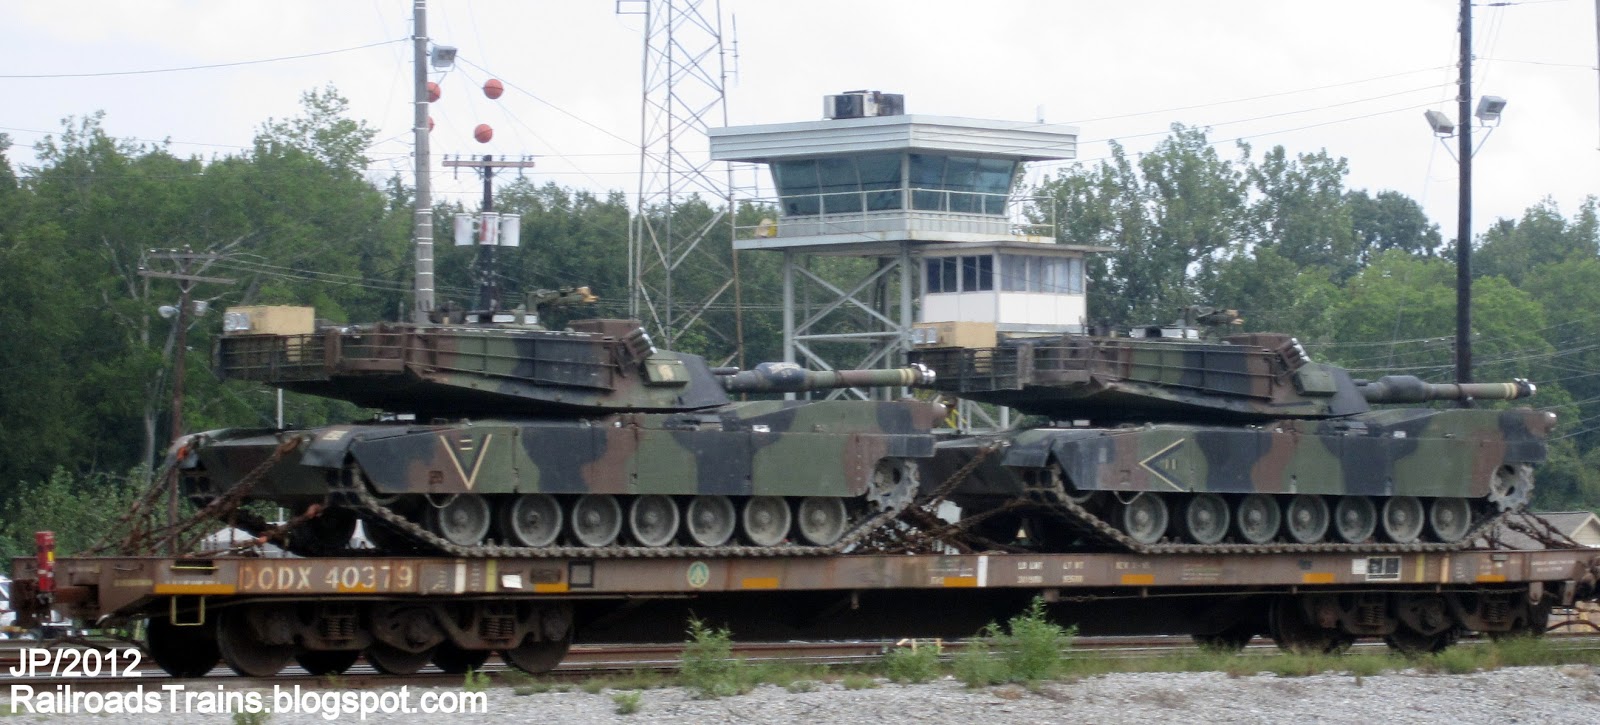 DODX 40379 TANK TRAIN Department Of Defense US Military Army Tanks Macon Georgia Norfolk Southern Railroad Brosnan Rail Yard